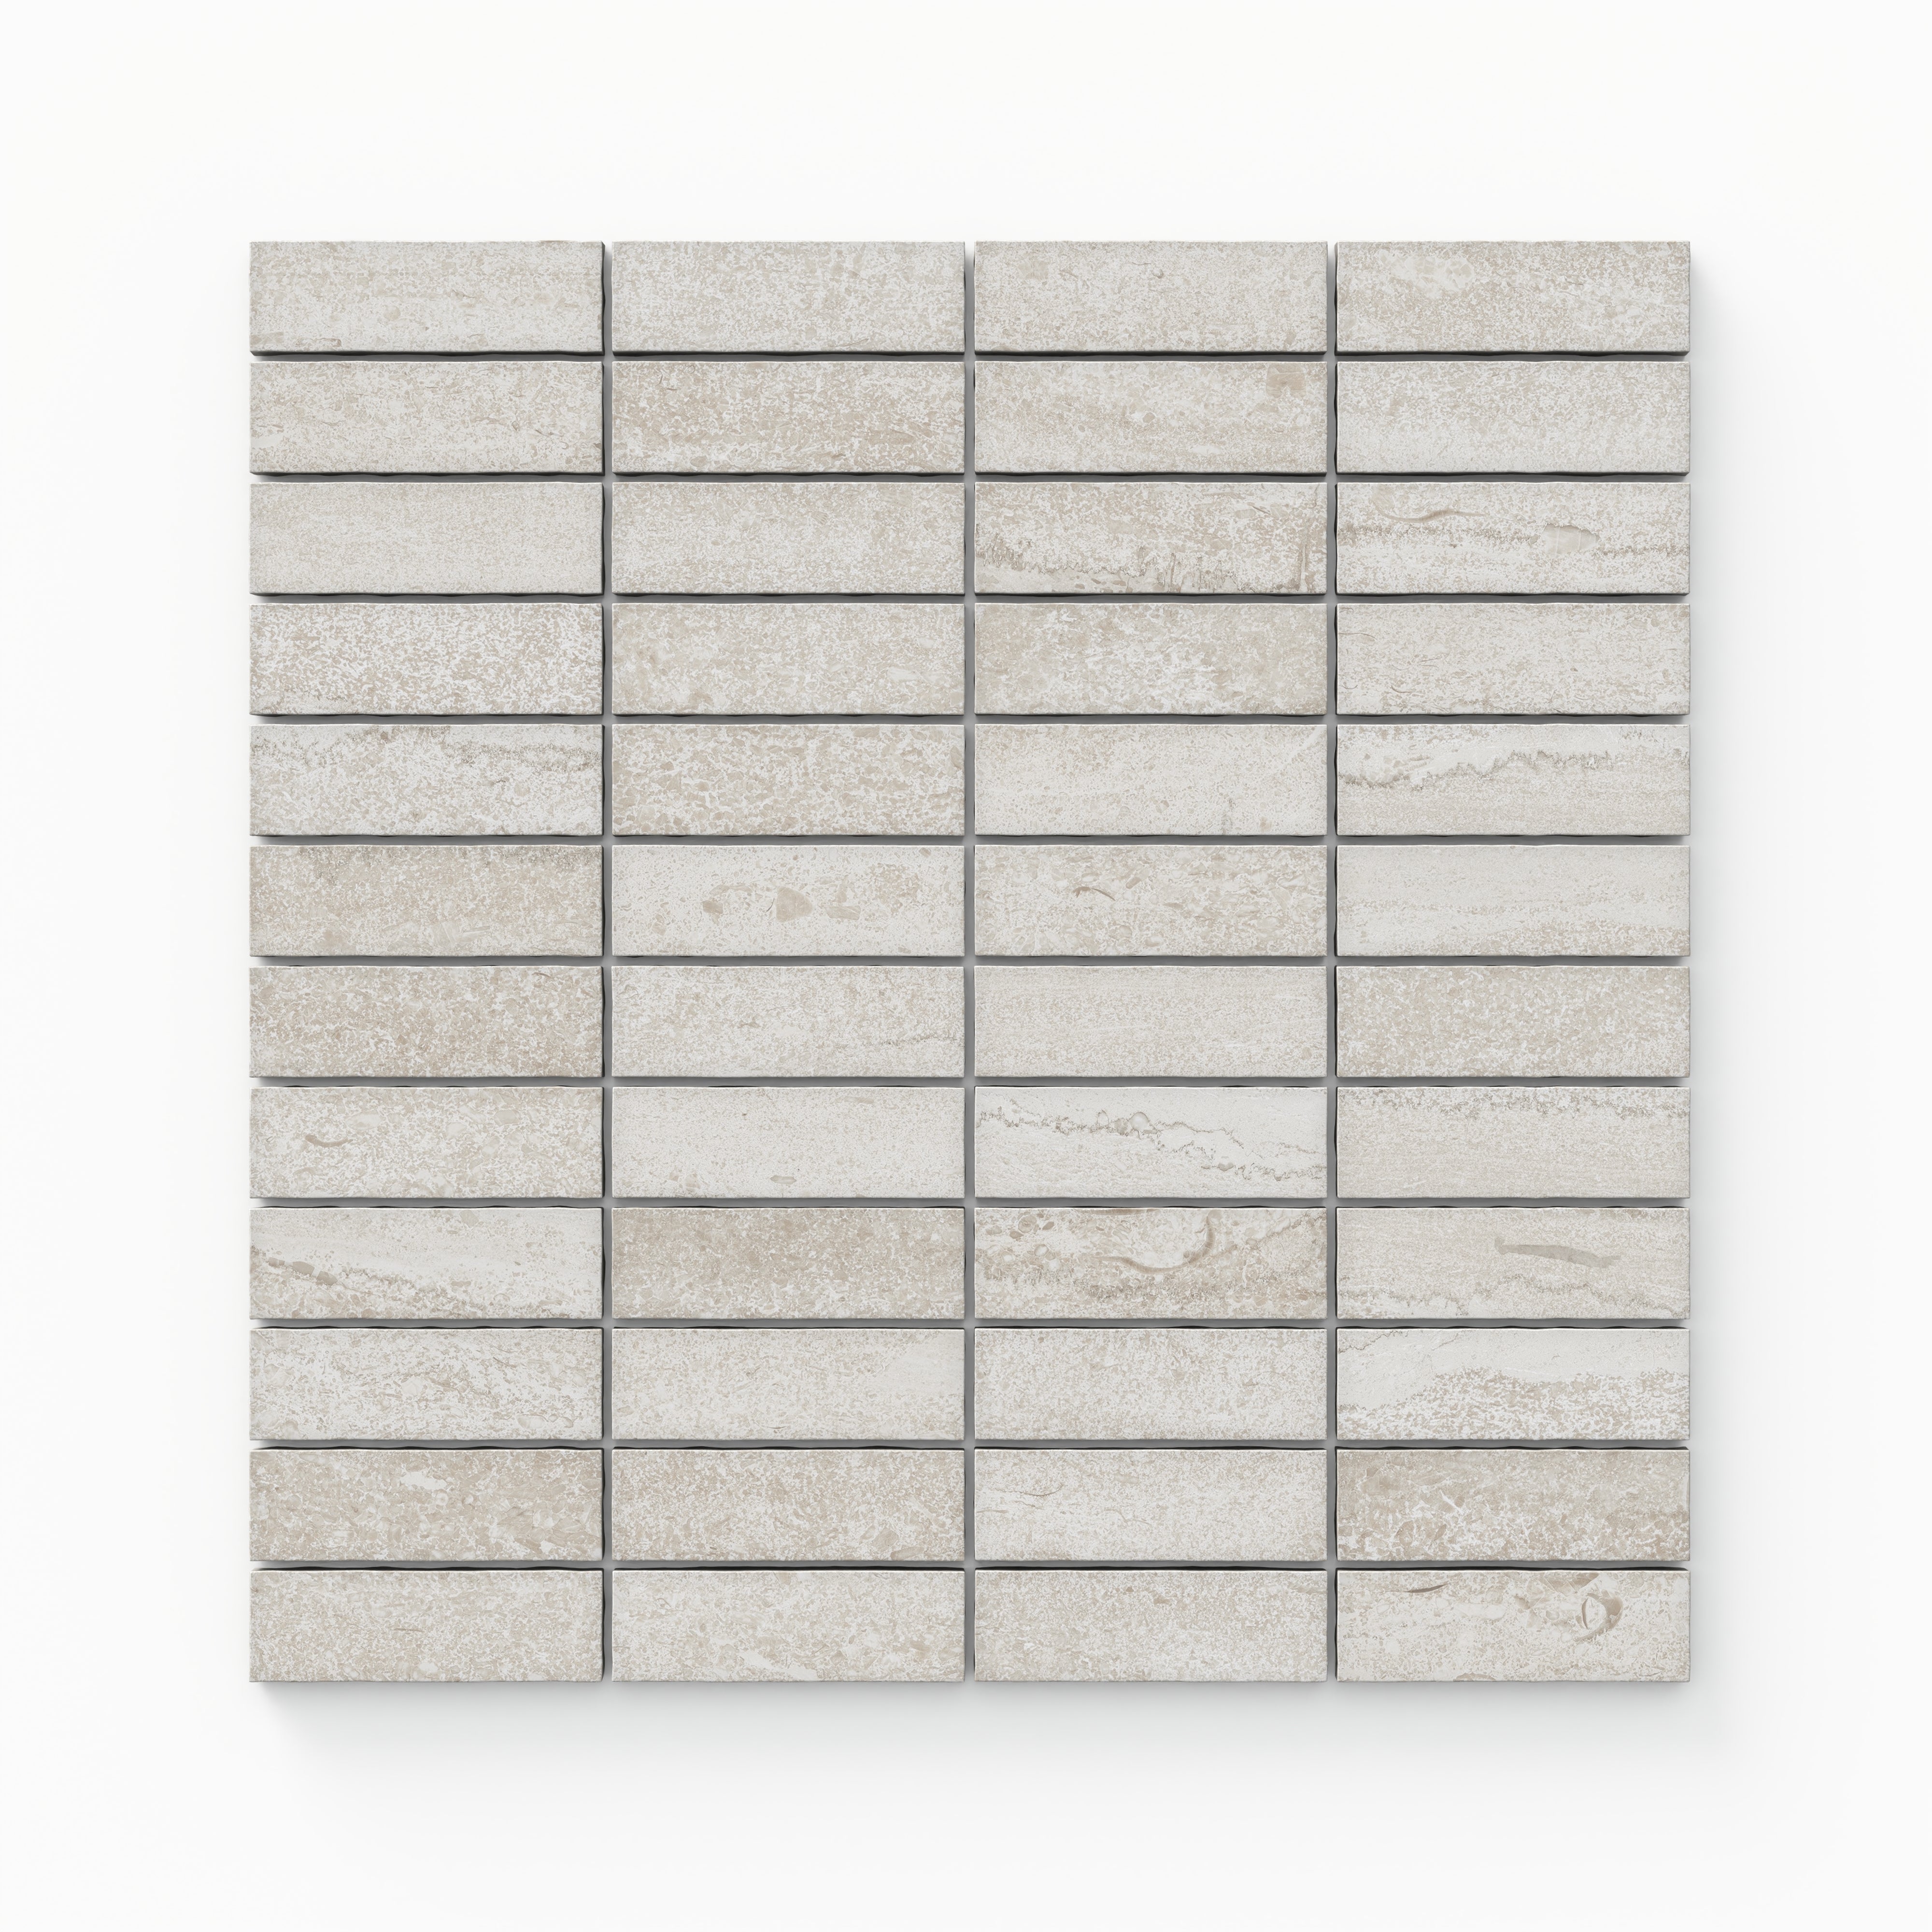 Tatum 1x3 Matte Porcelain Mosaic Tile in Vein-Cut Sand